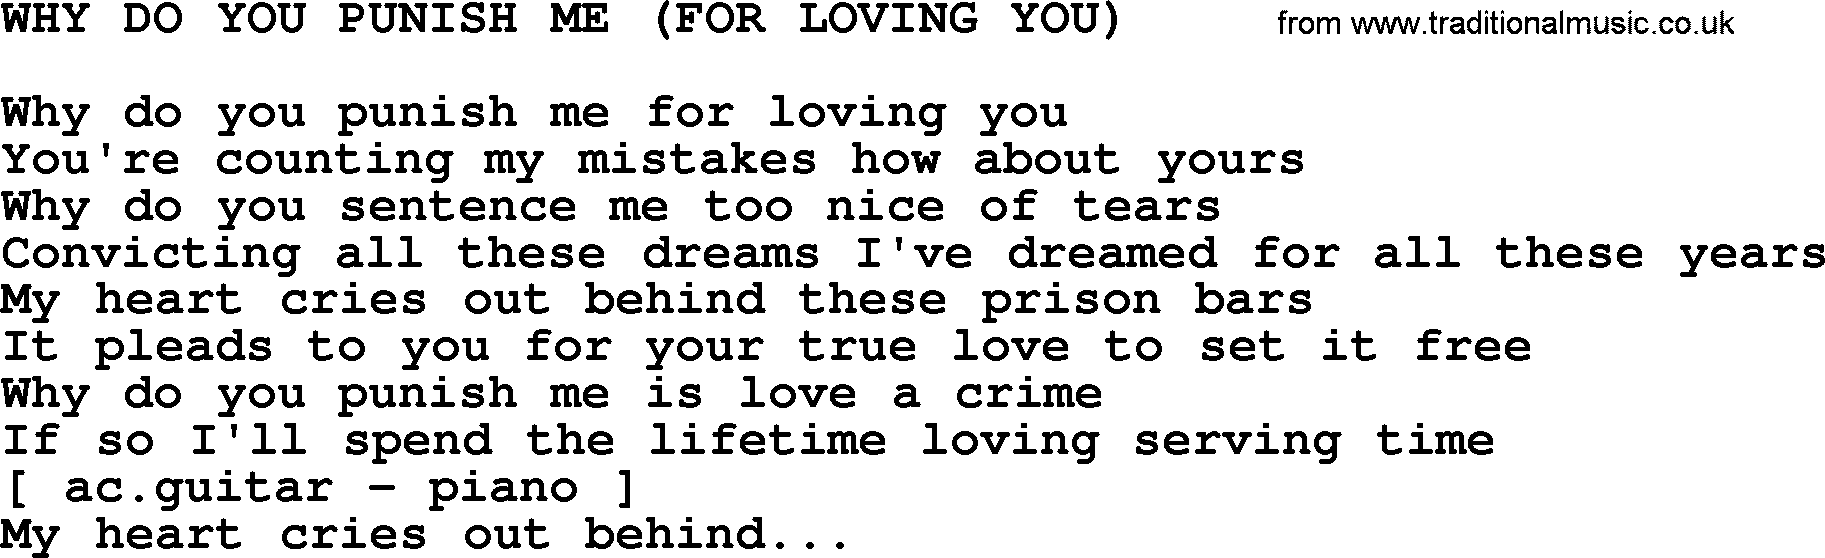 Johnny Cash song Why Do You Punish Me(For Loving You).txt lyrics